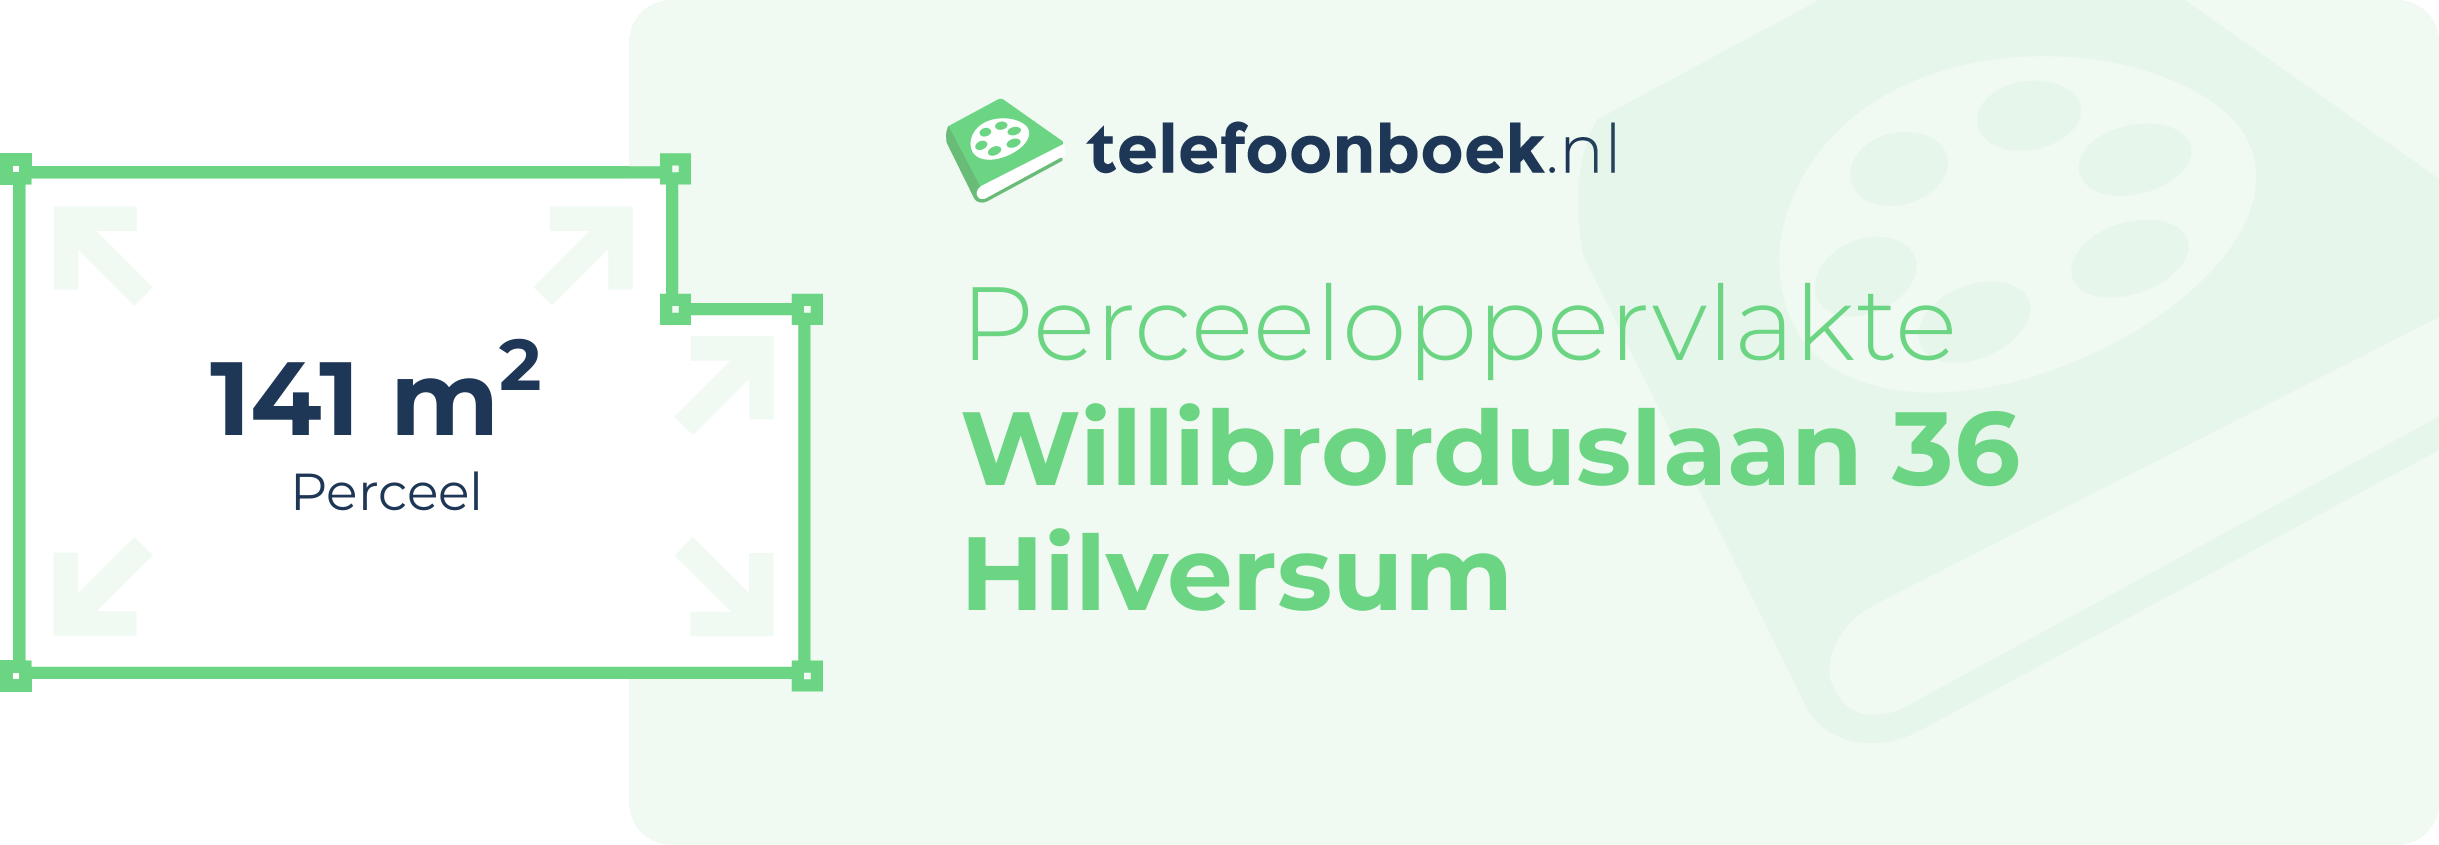 Perceeloppervlakte Willibrorduslaan 36 Hilversum